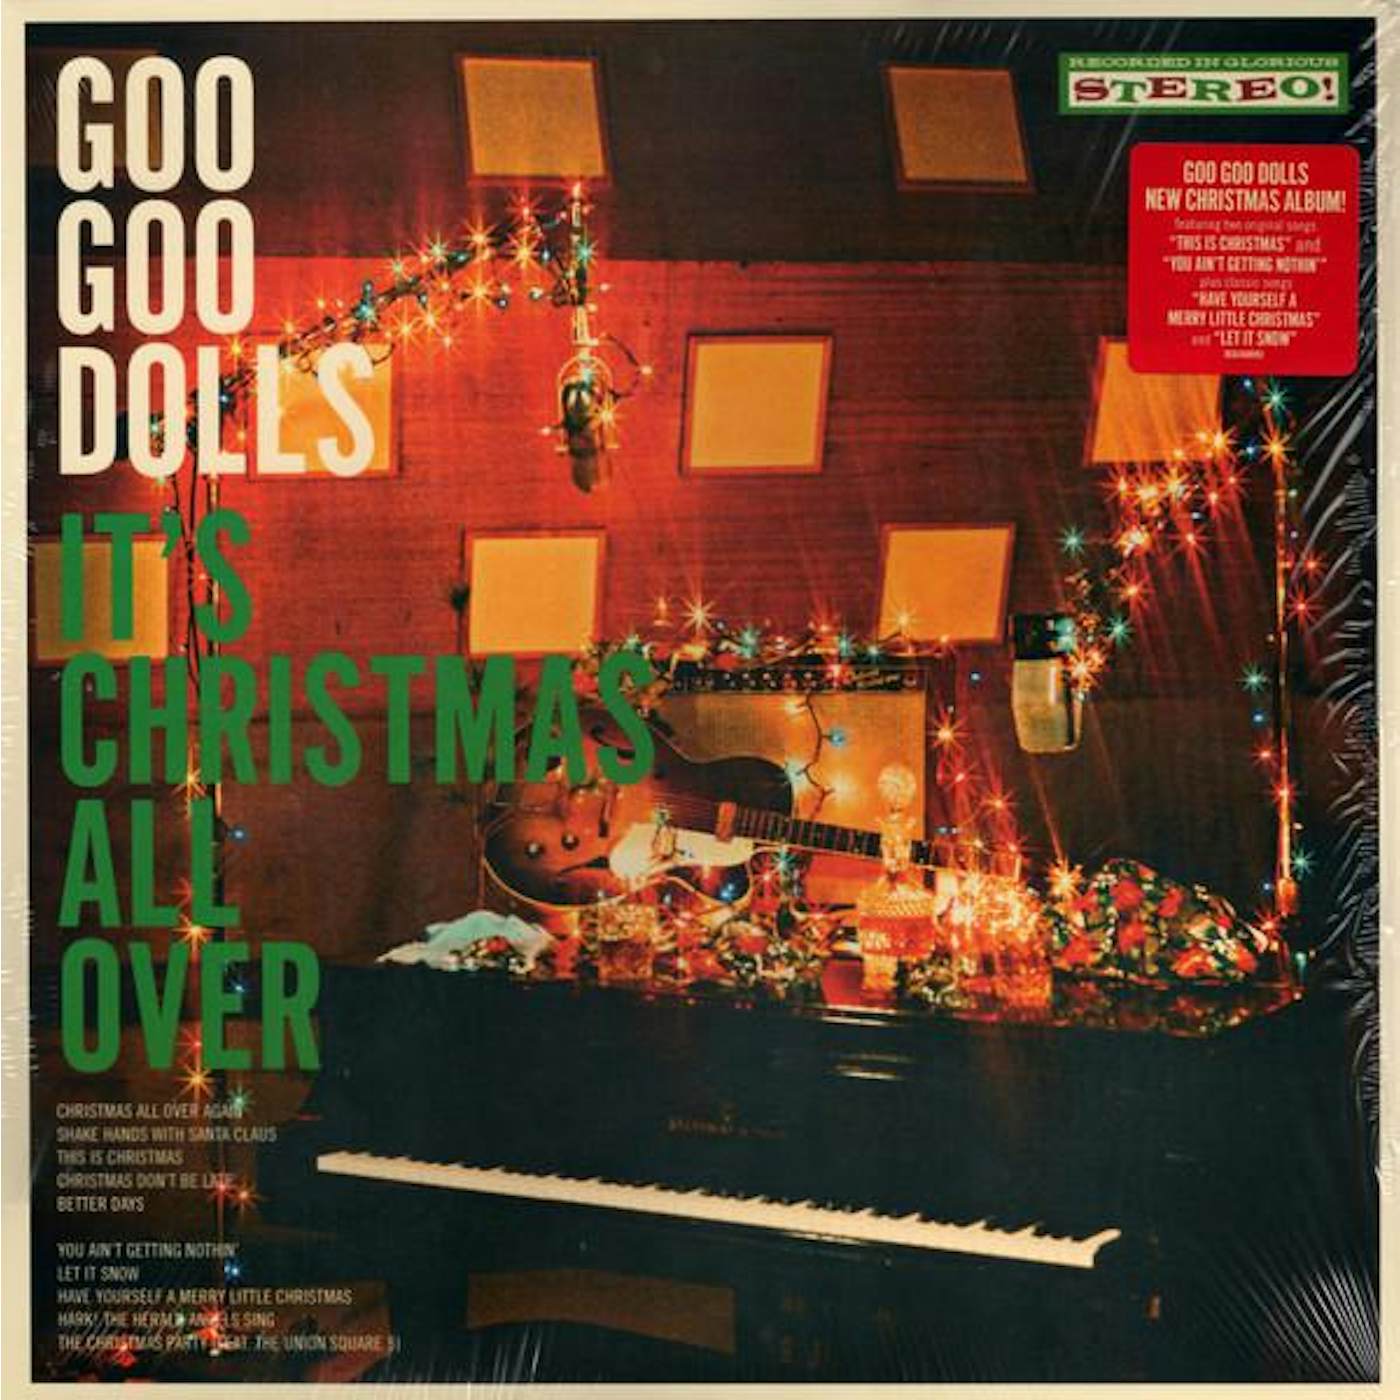 The Goo Goo Dolls It's Christmas All Over Vinyl Record